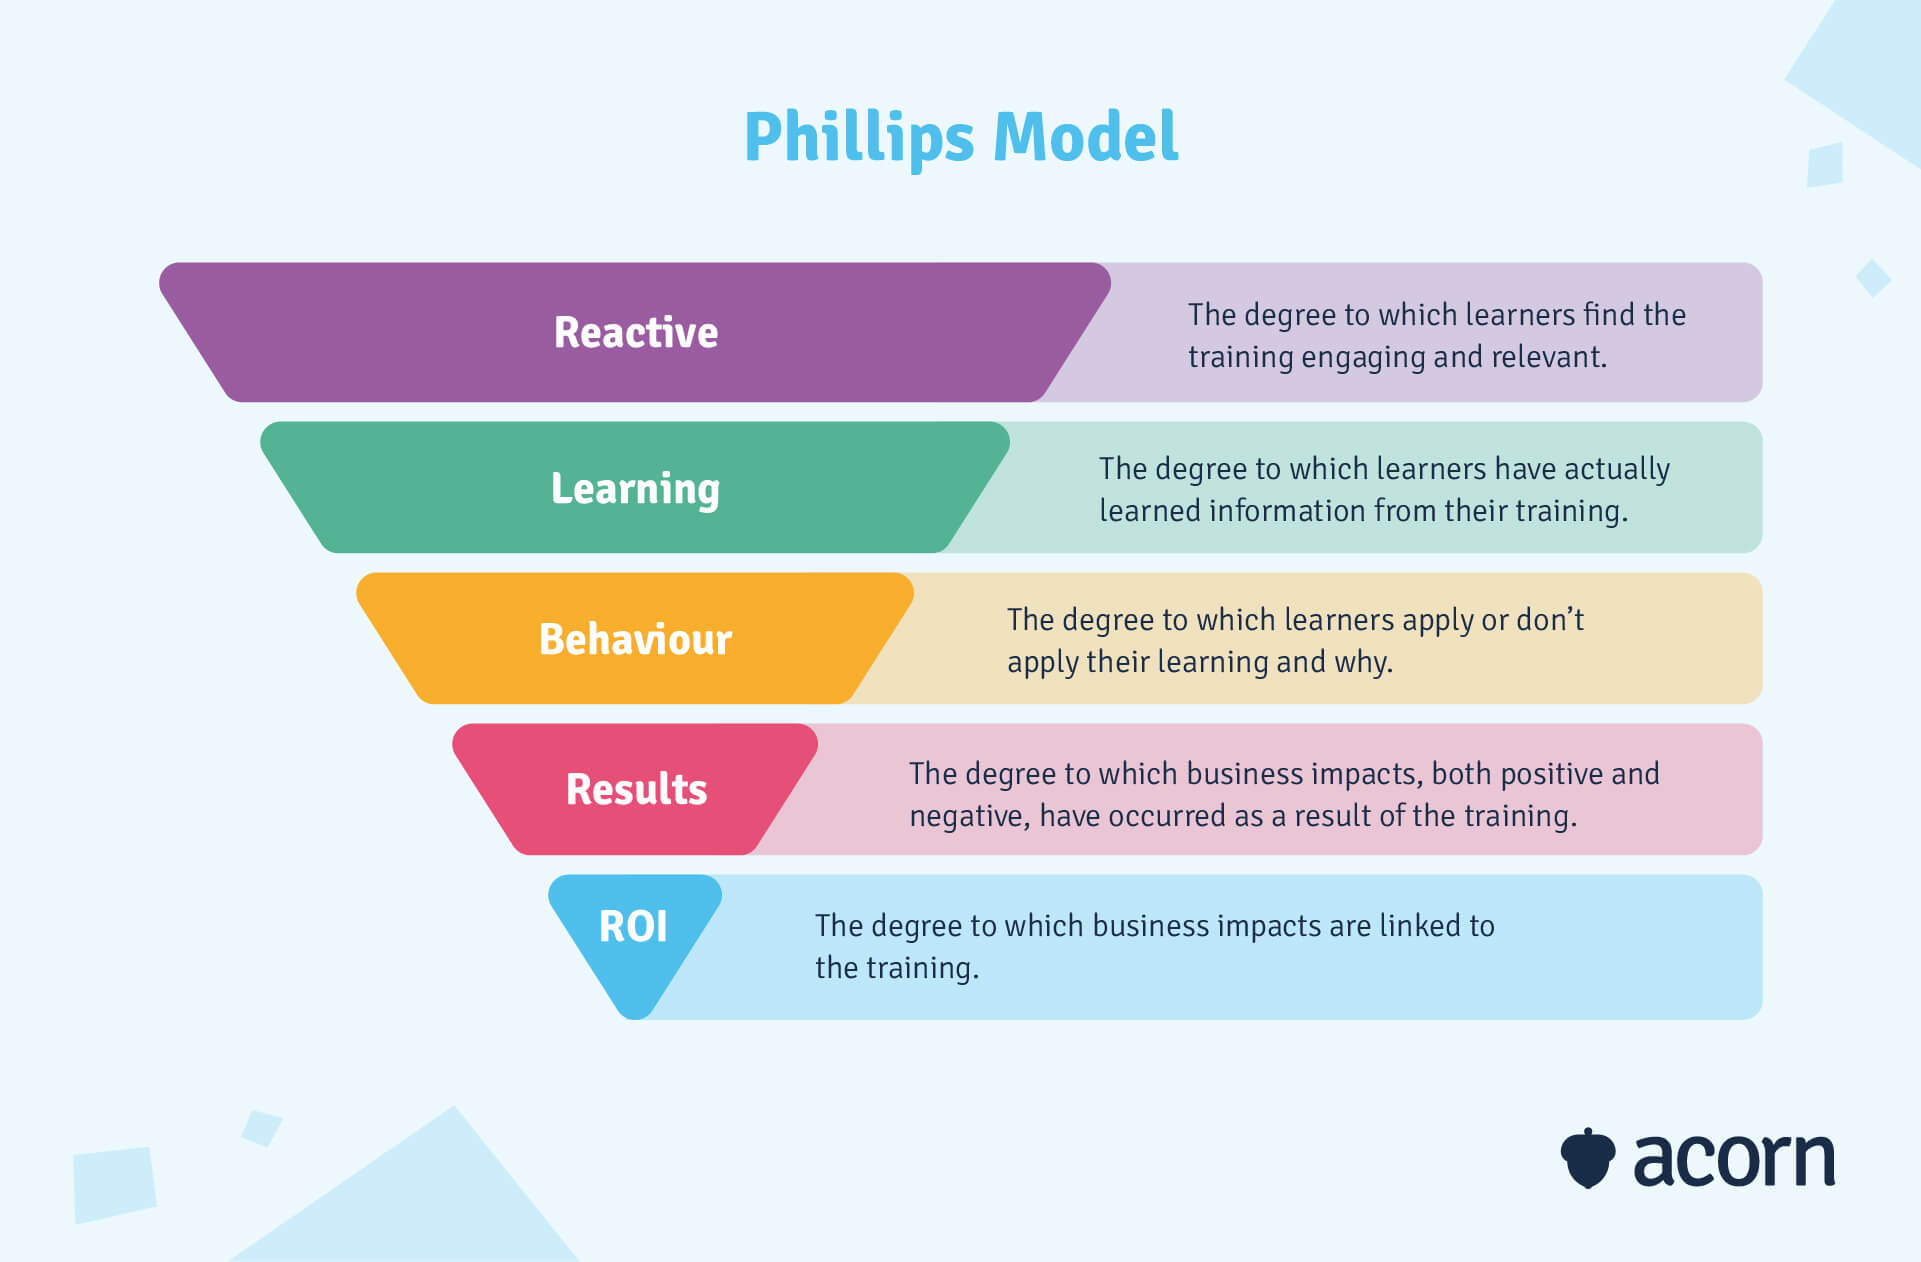 The Phillips Model method for analysing ROI in training